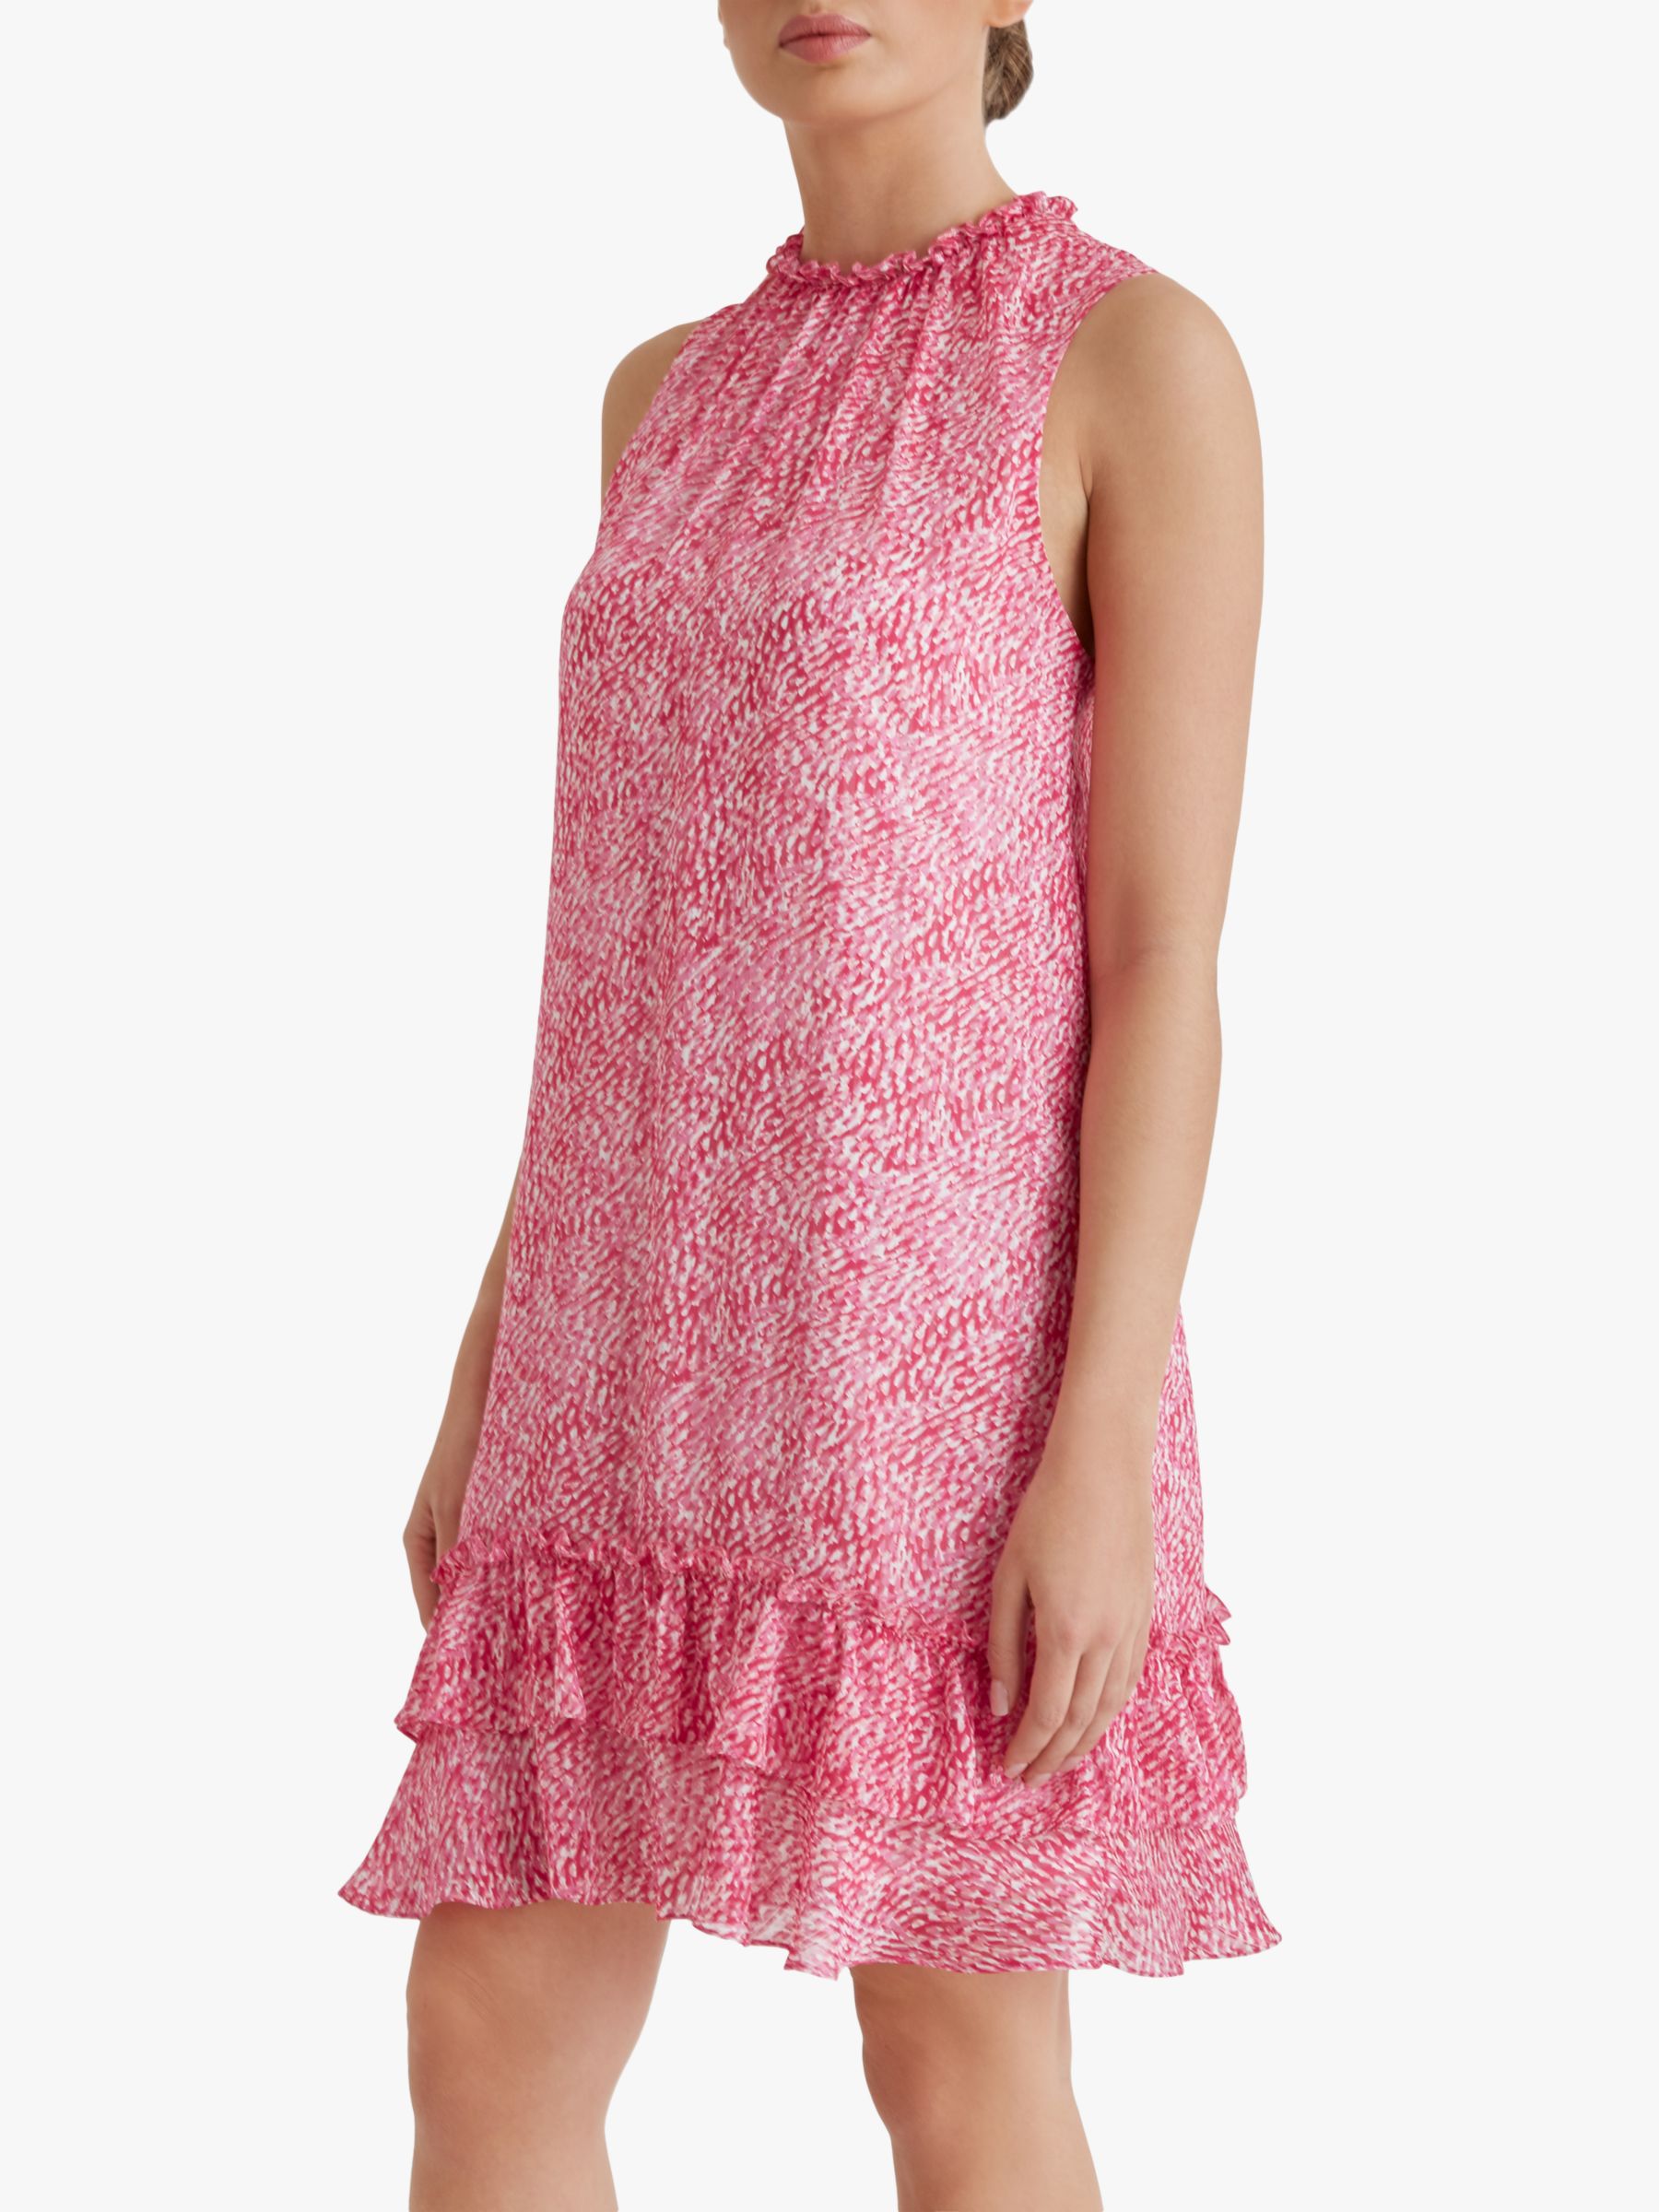 Fenn Wright Manson Petite Mirabelle Dress, Raspberry Pink